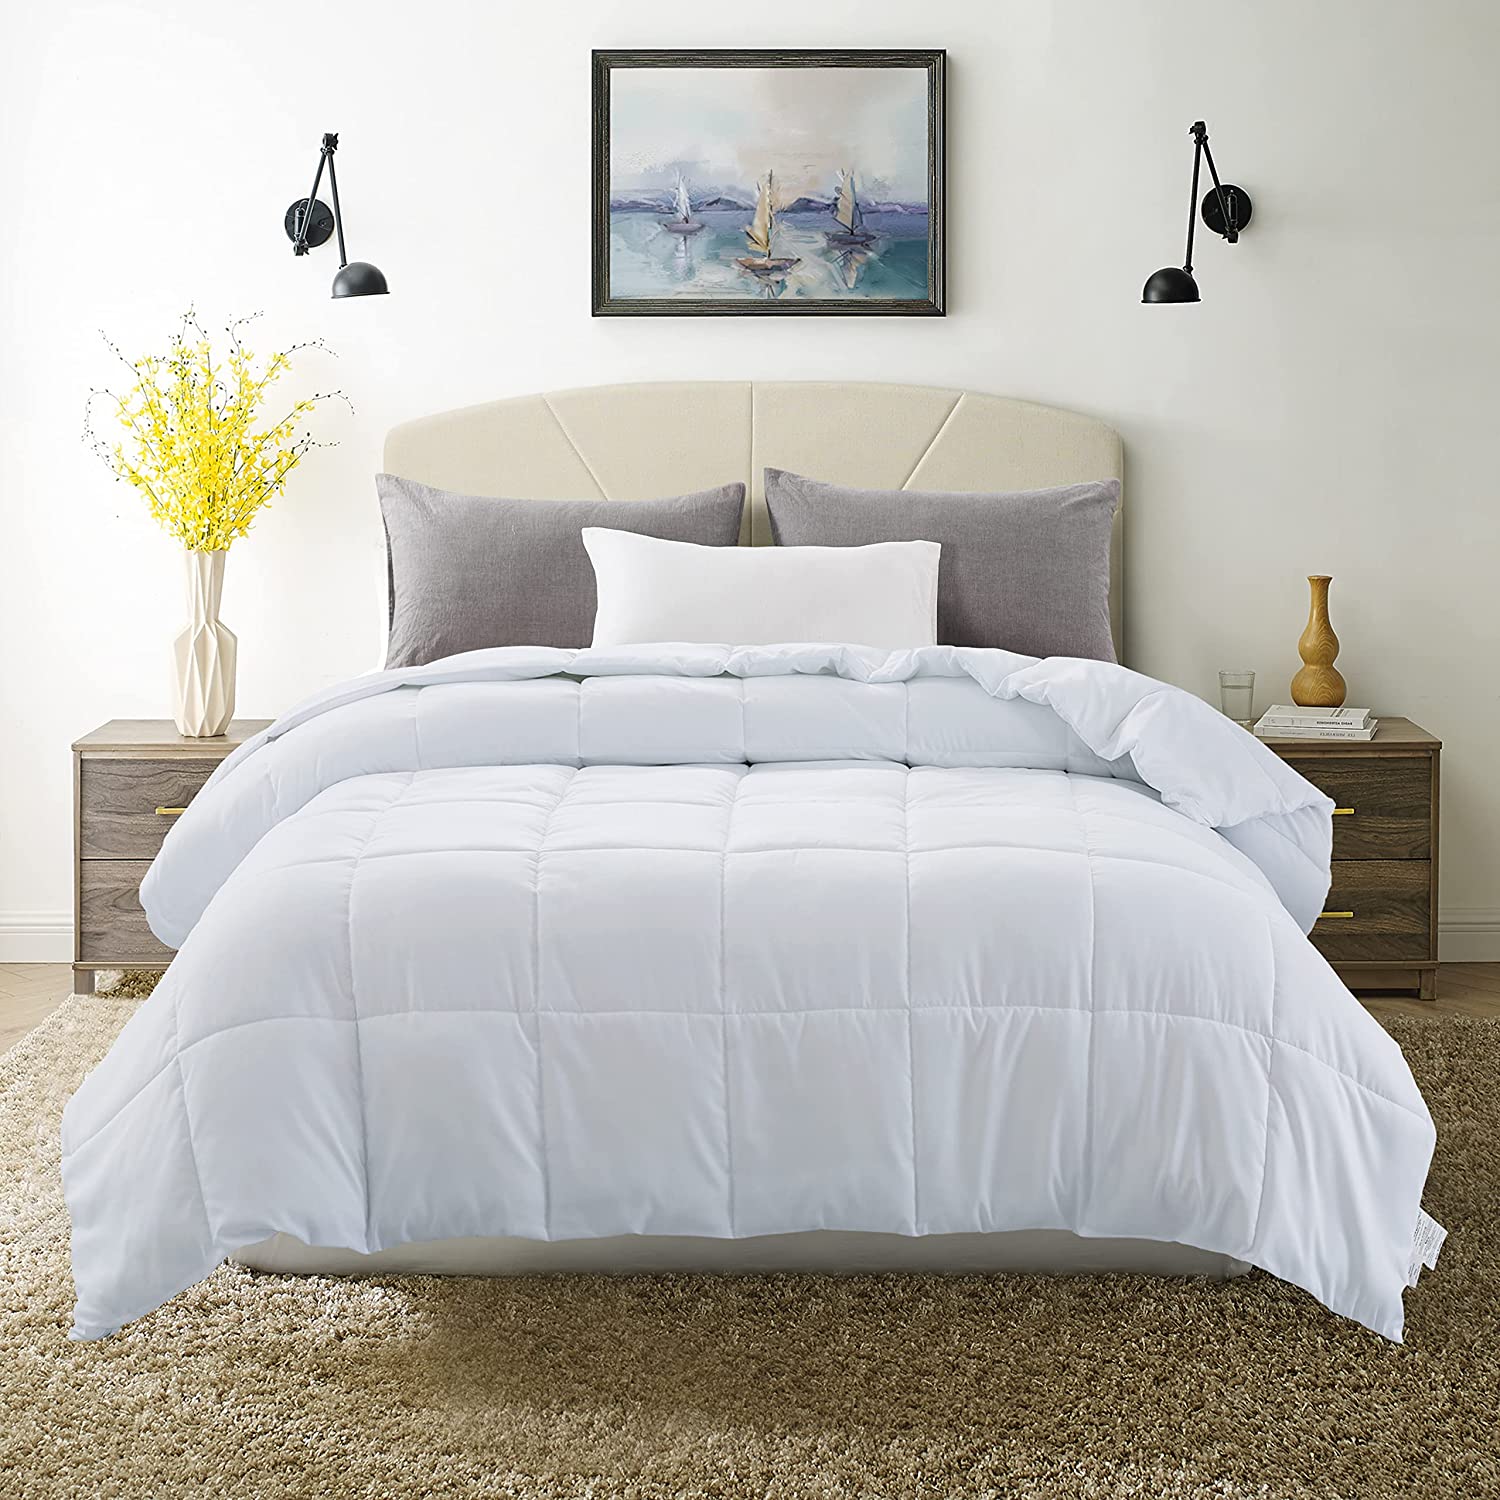 Price:$59.99  Down Alternative Comforter- White Corner Duvet Tabs- Lightweight All Season Duvet Insert-Stand Alone Comforter,King Size(102×90 Inch) : Home & Kitchen